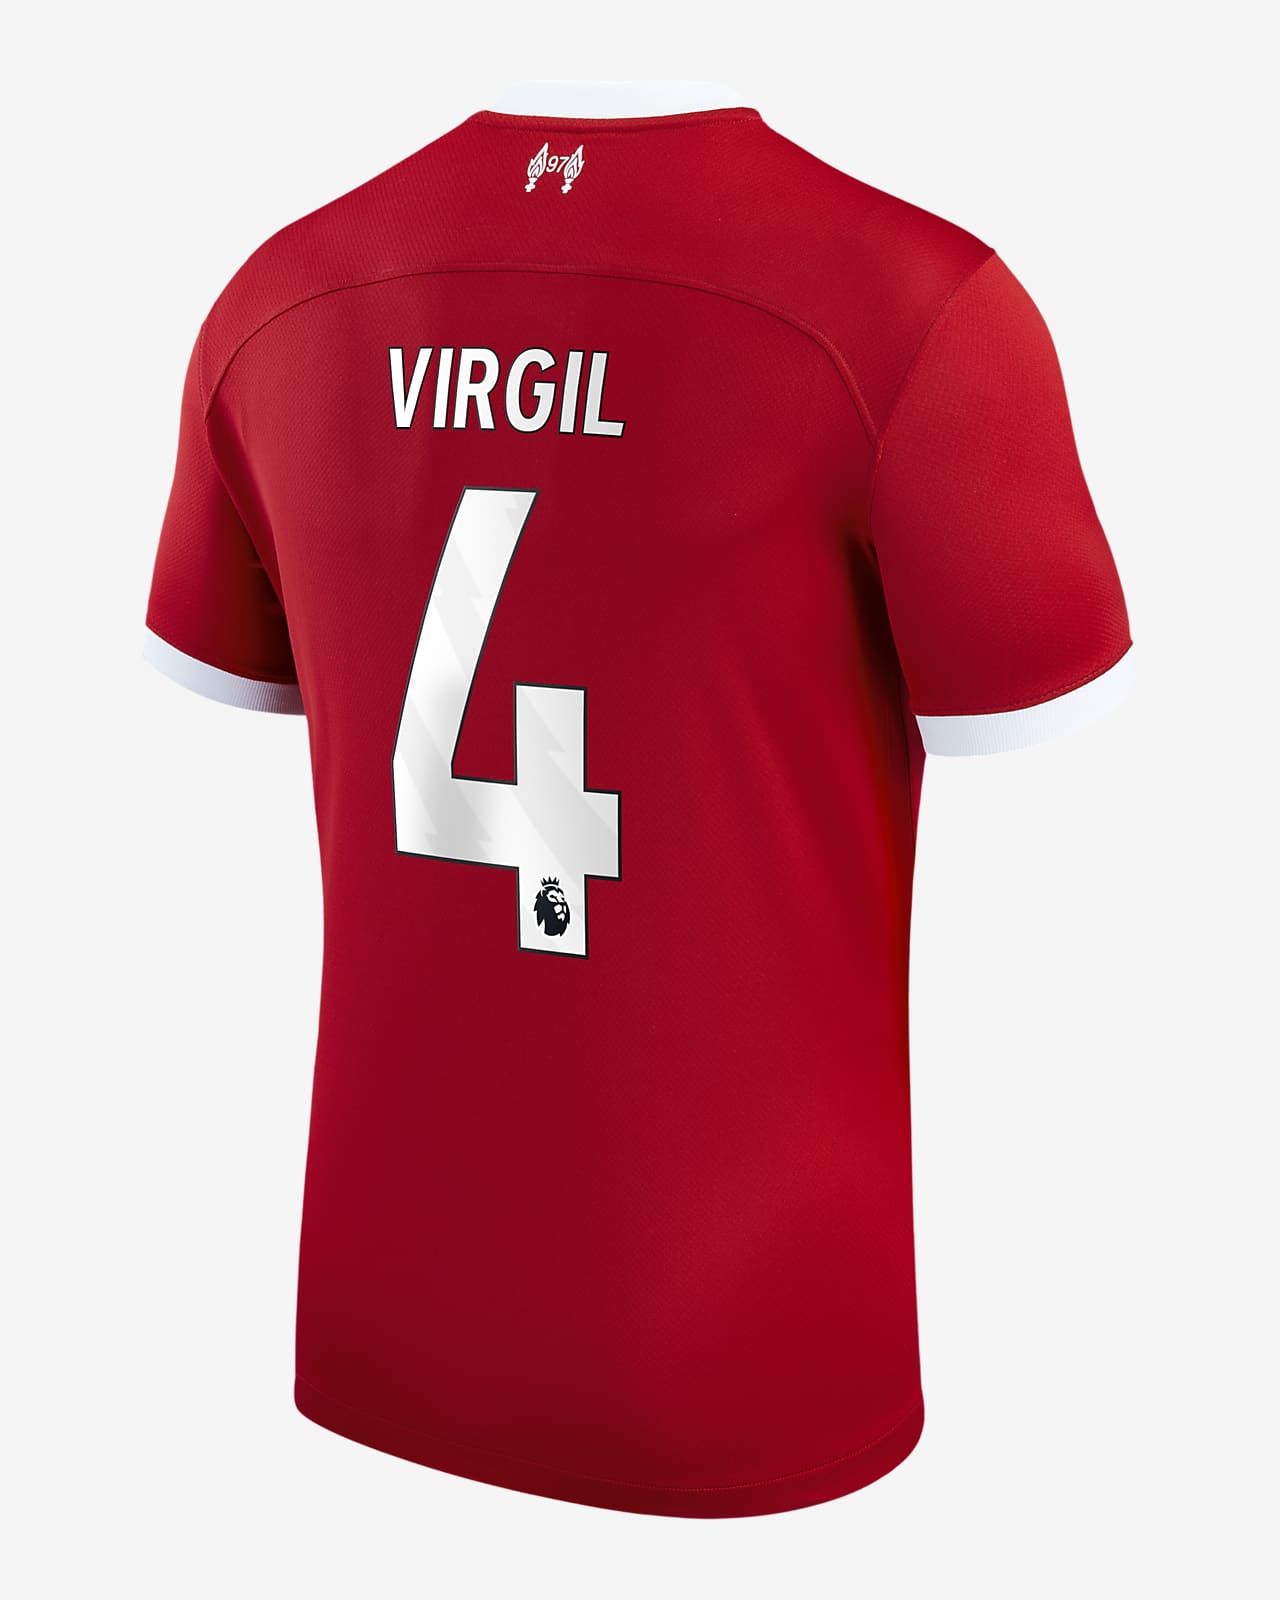 Virgil jersey